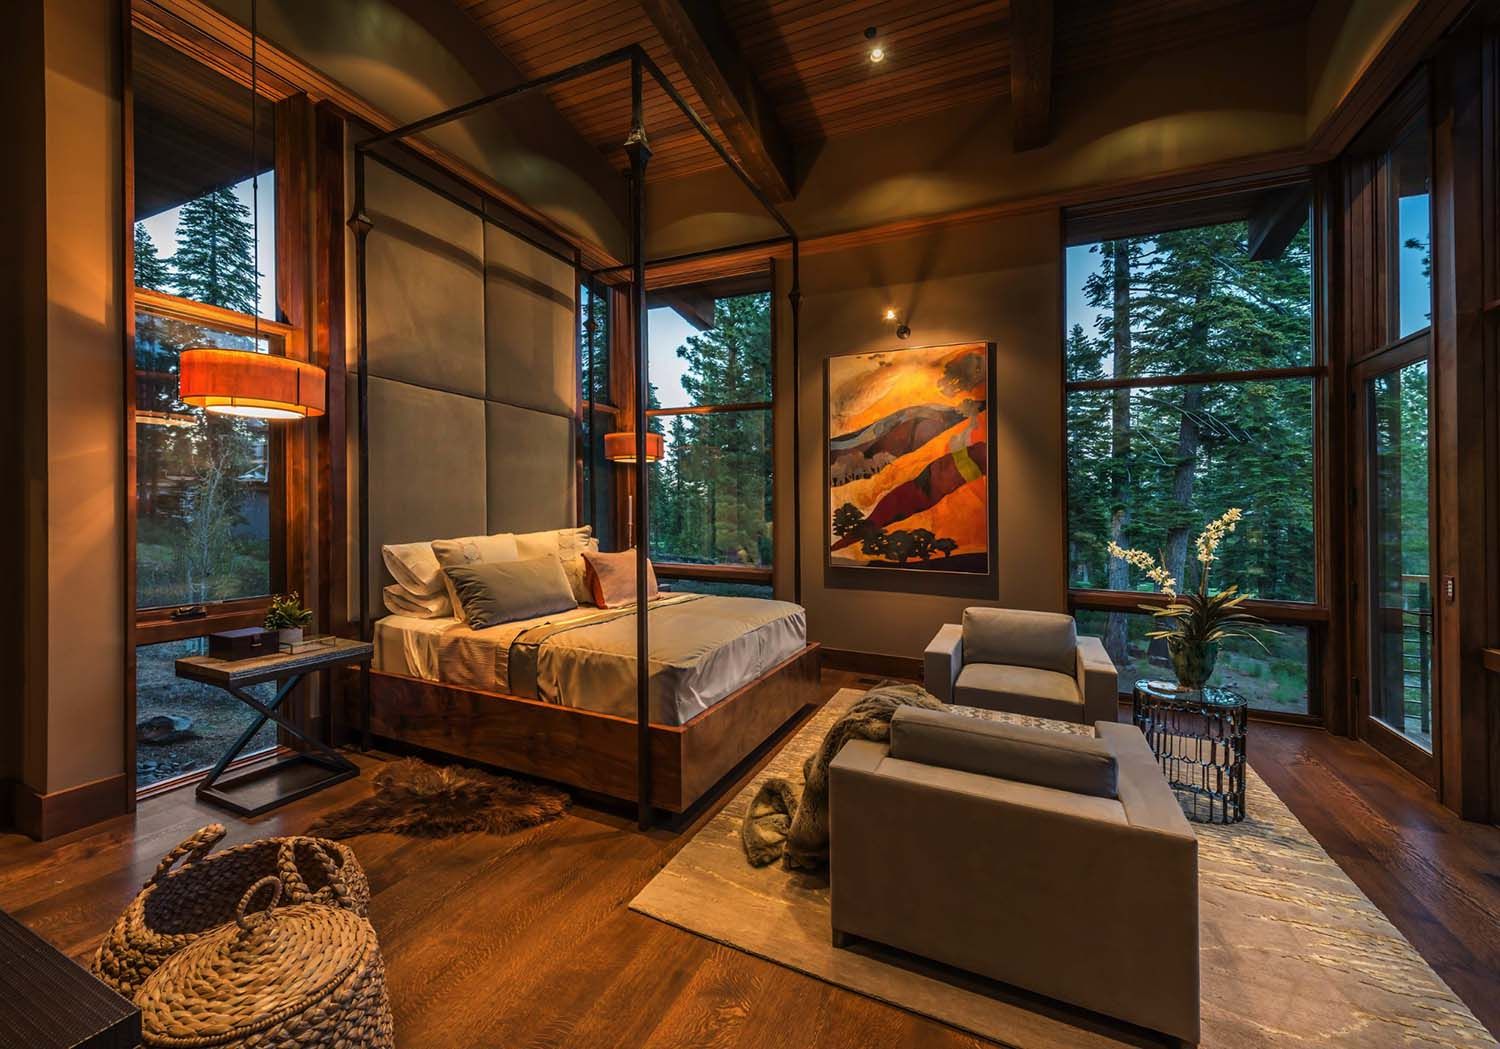 16 Creative And Contemporary Bedroom Designs For A Cozy Retreat